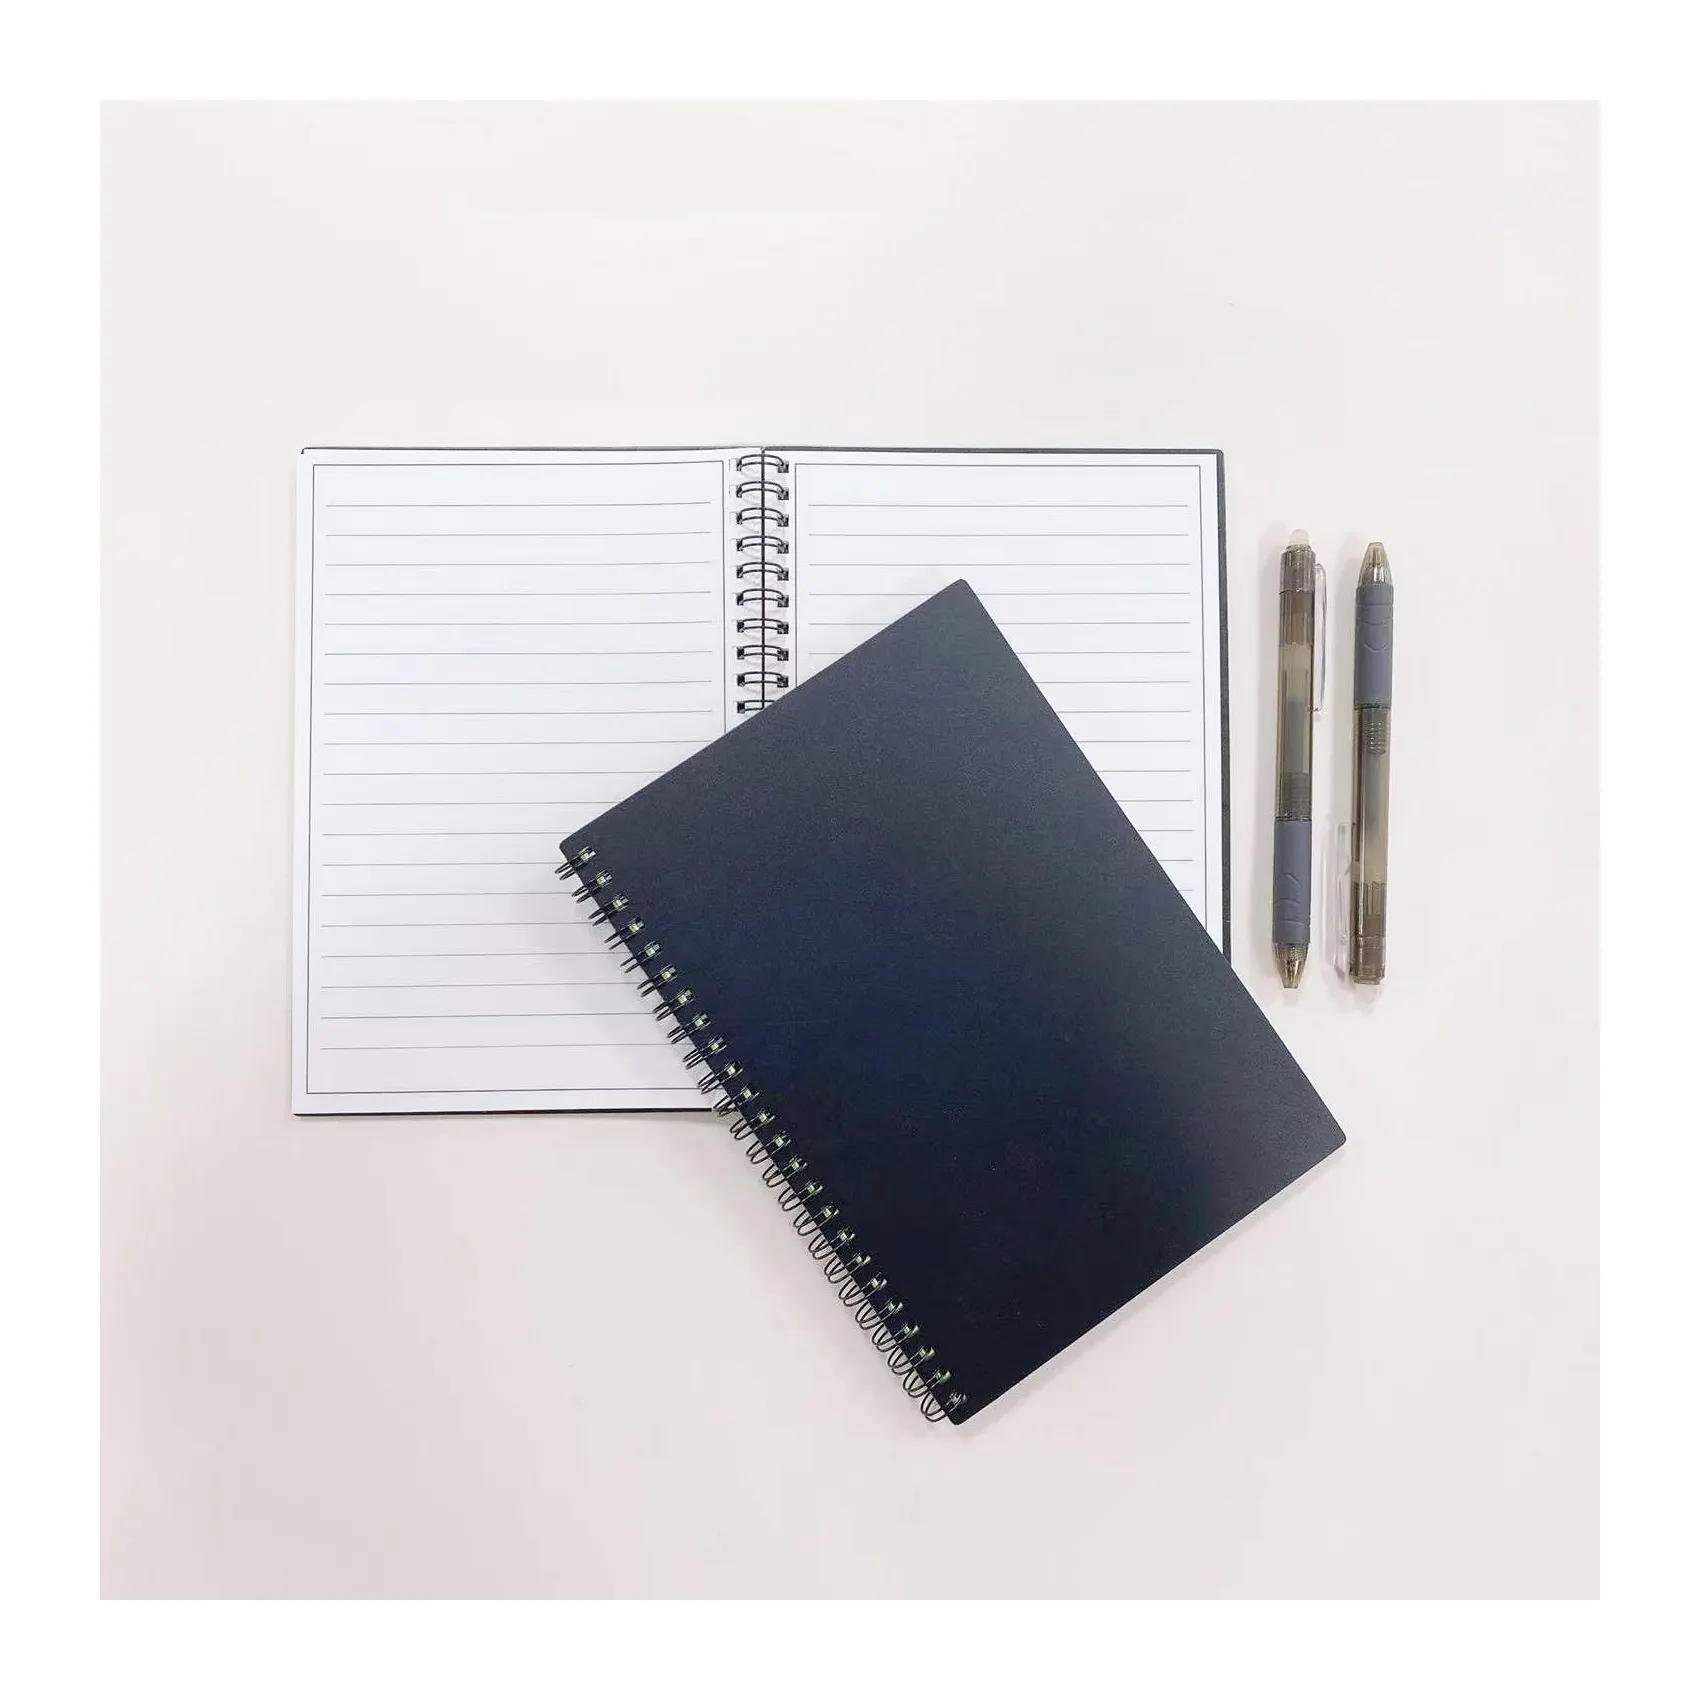 Waterproof Smart Magic Reusable Notebook Ruled Eco-Friendly Cuadernos for Women Men